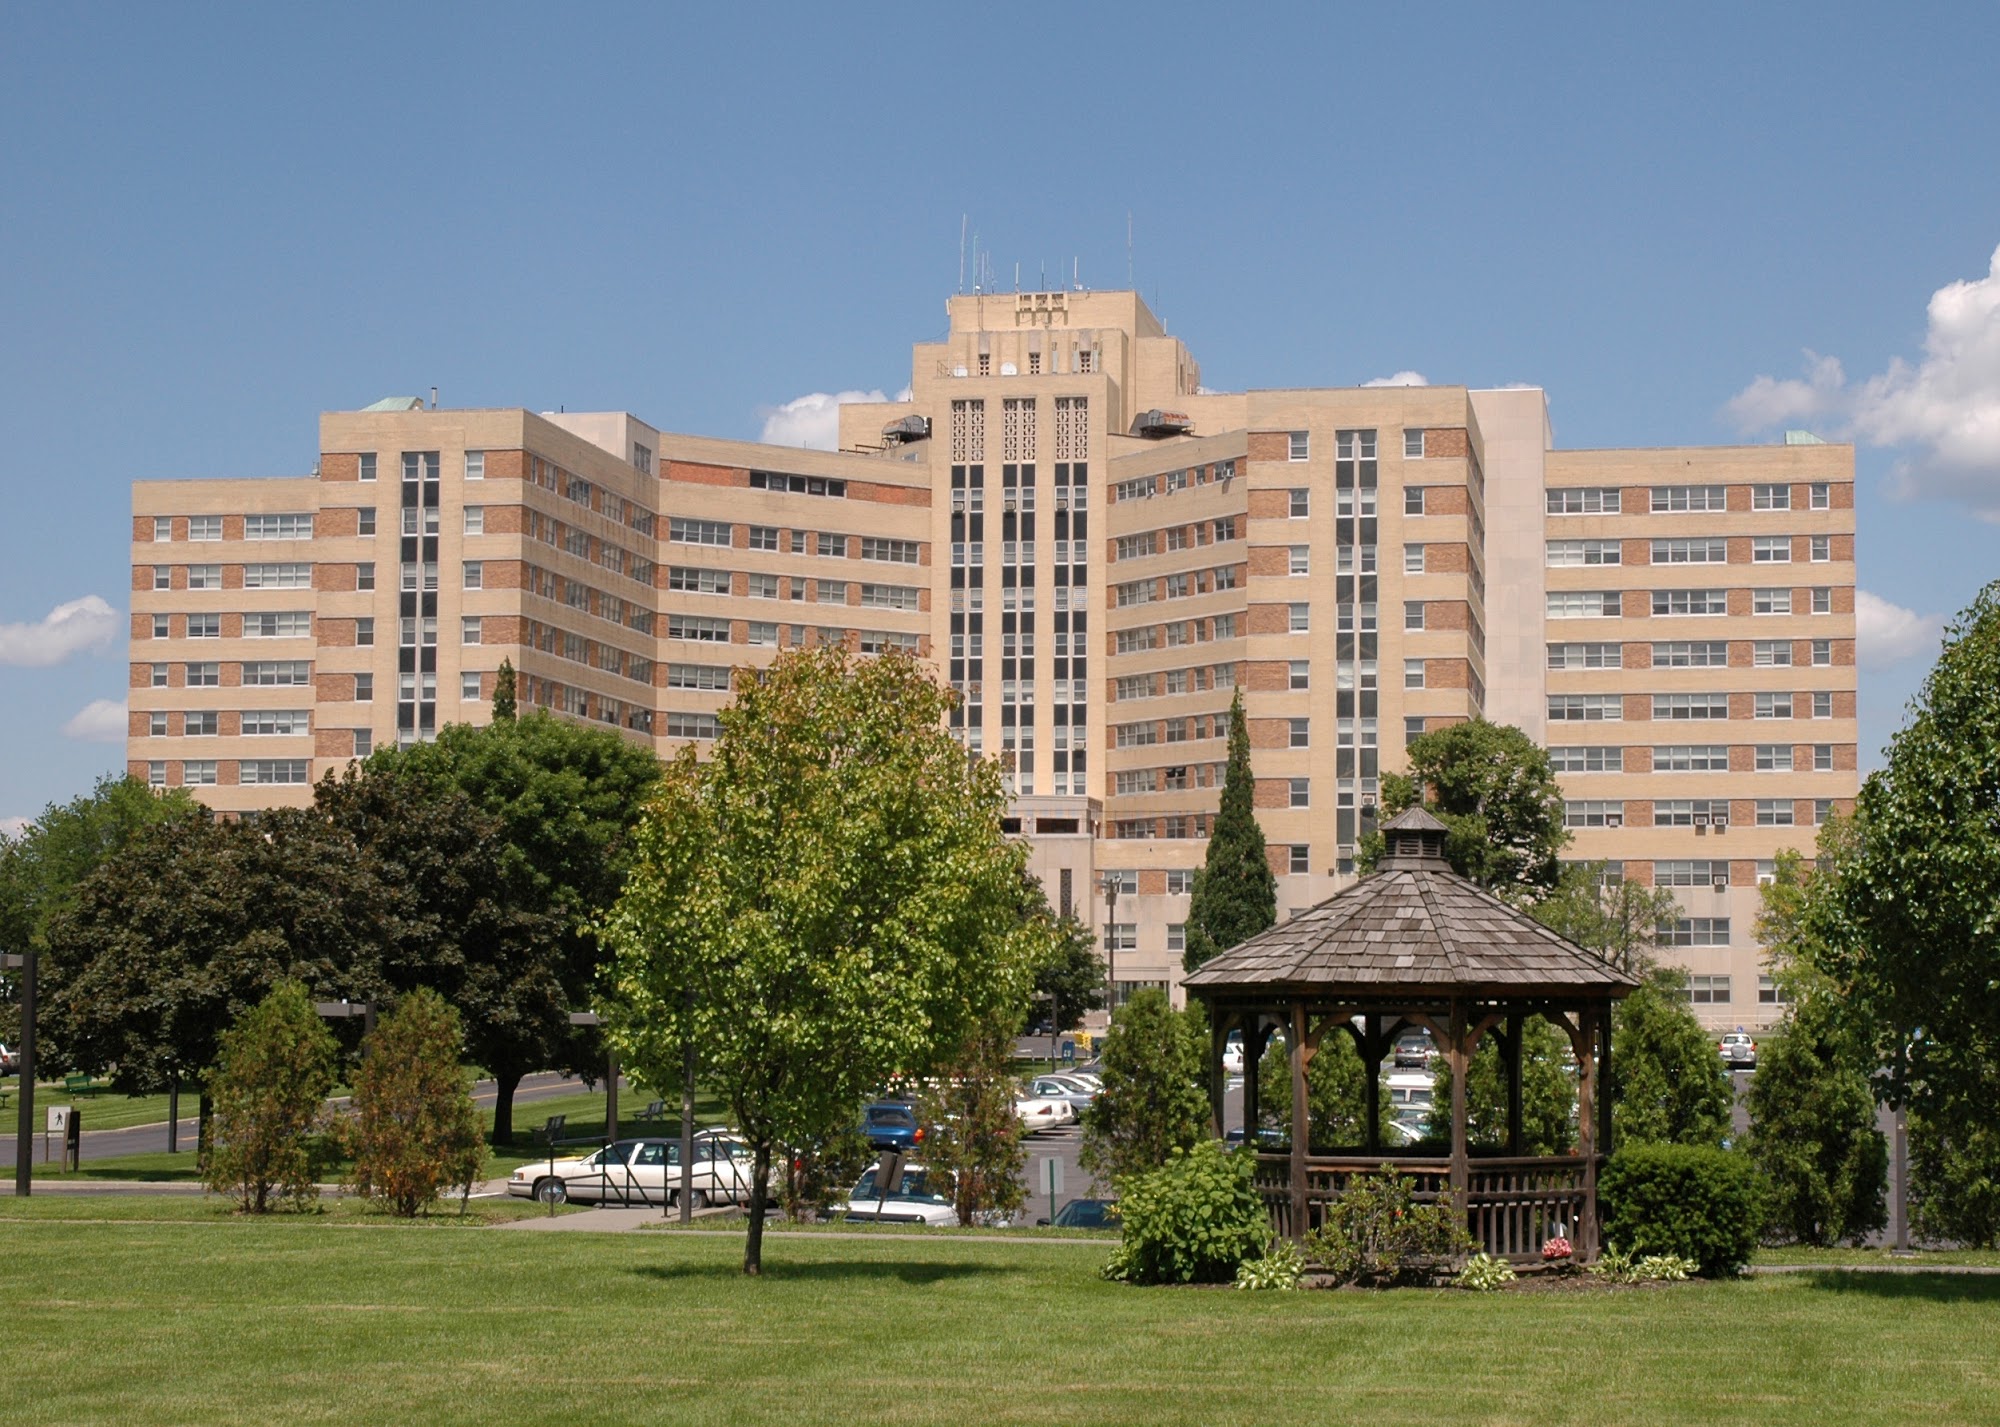 Albany Stratton VA Medical Center